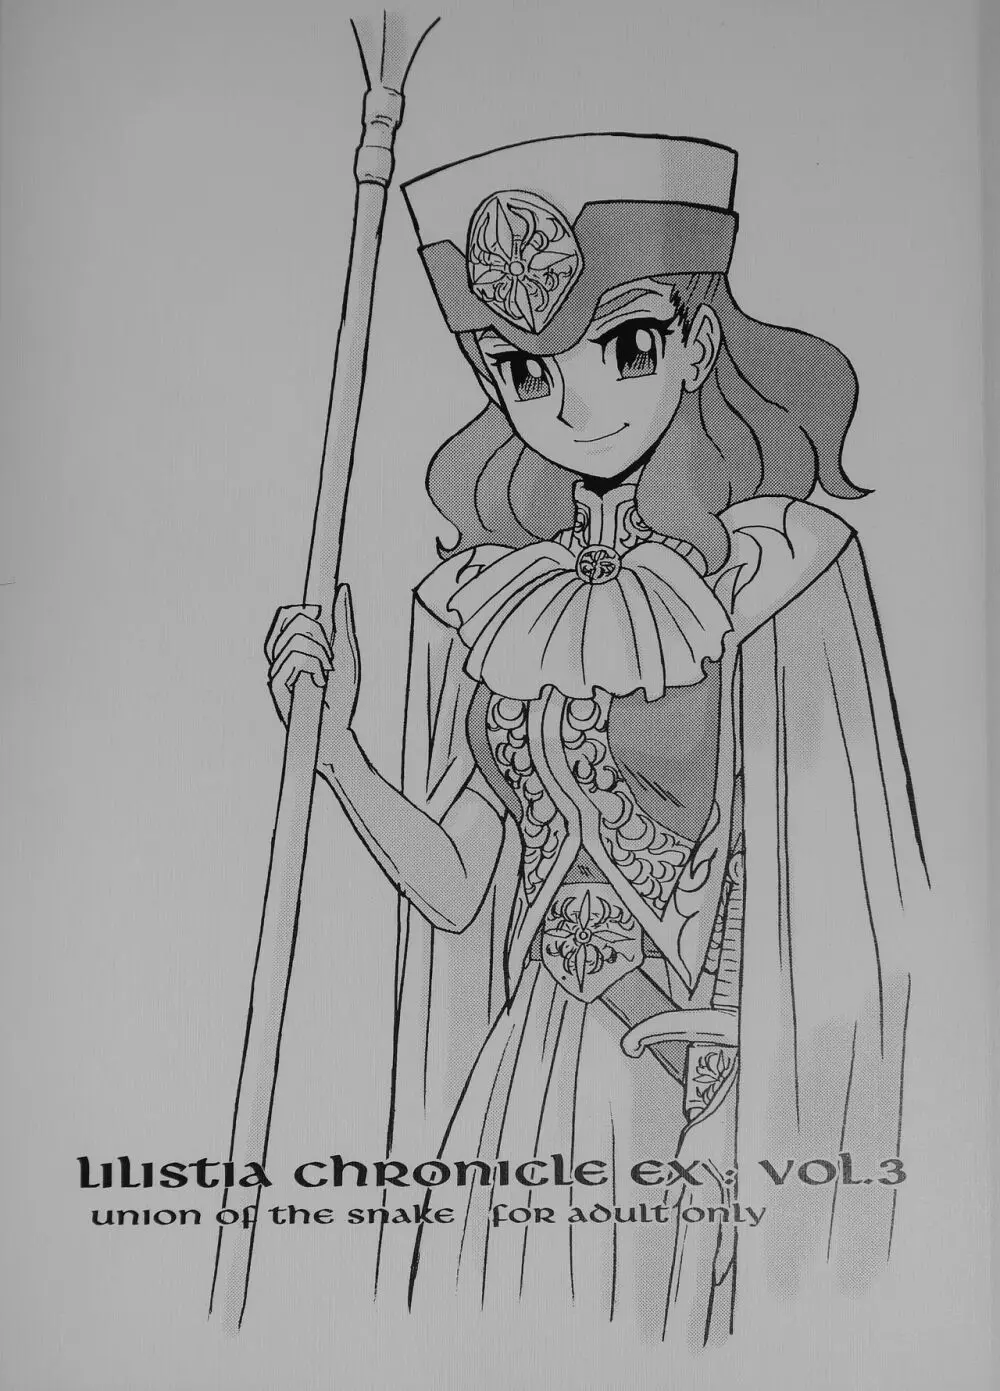 LILISTIA CHRONICLE EX : Vol.3